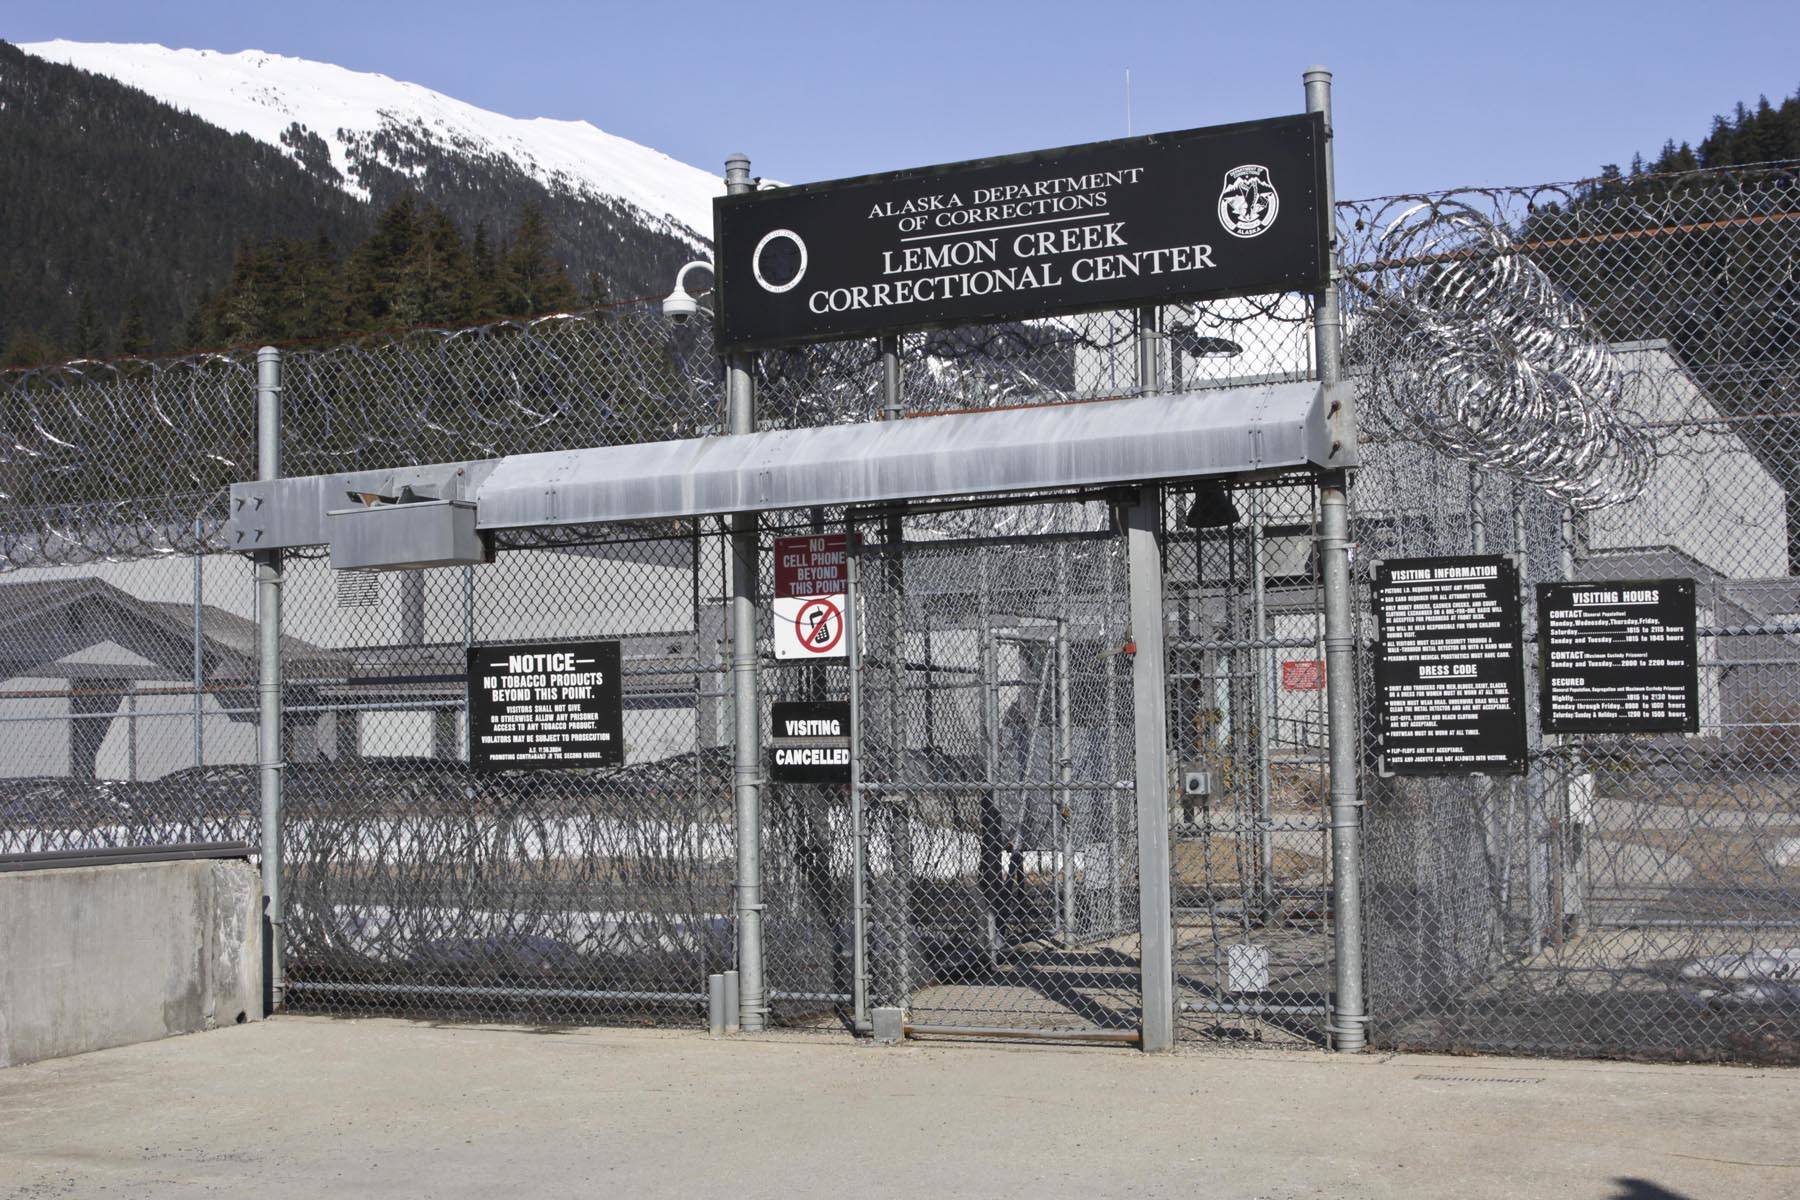 Lemon Creek Correctional Center has multiple confirmed cases of the coronavirus, April 10, 2020. (Michael S. Lockett | Juneau Empire)